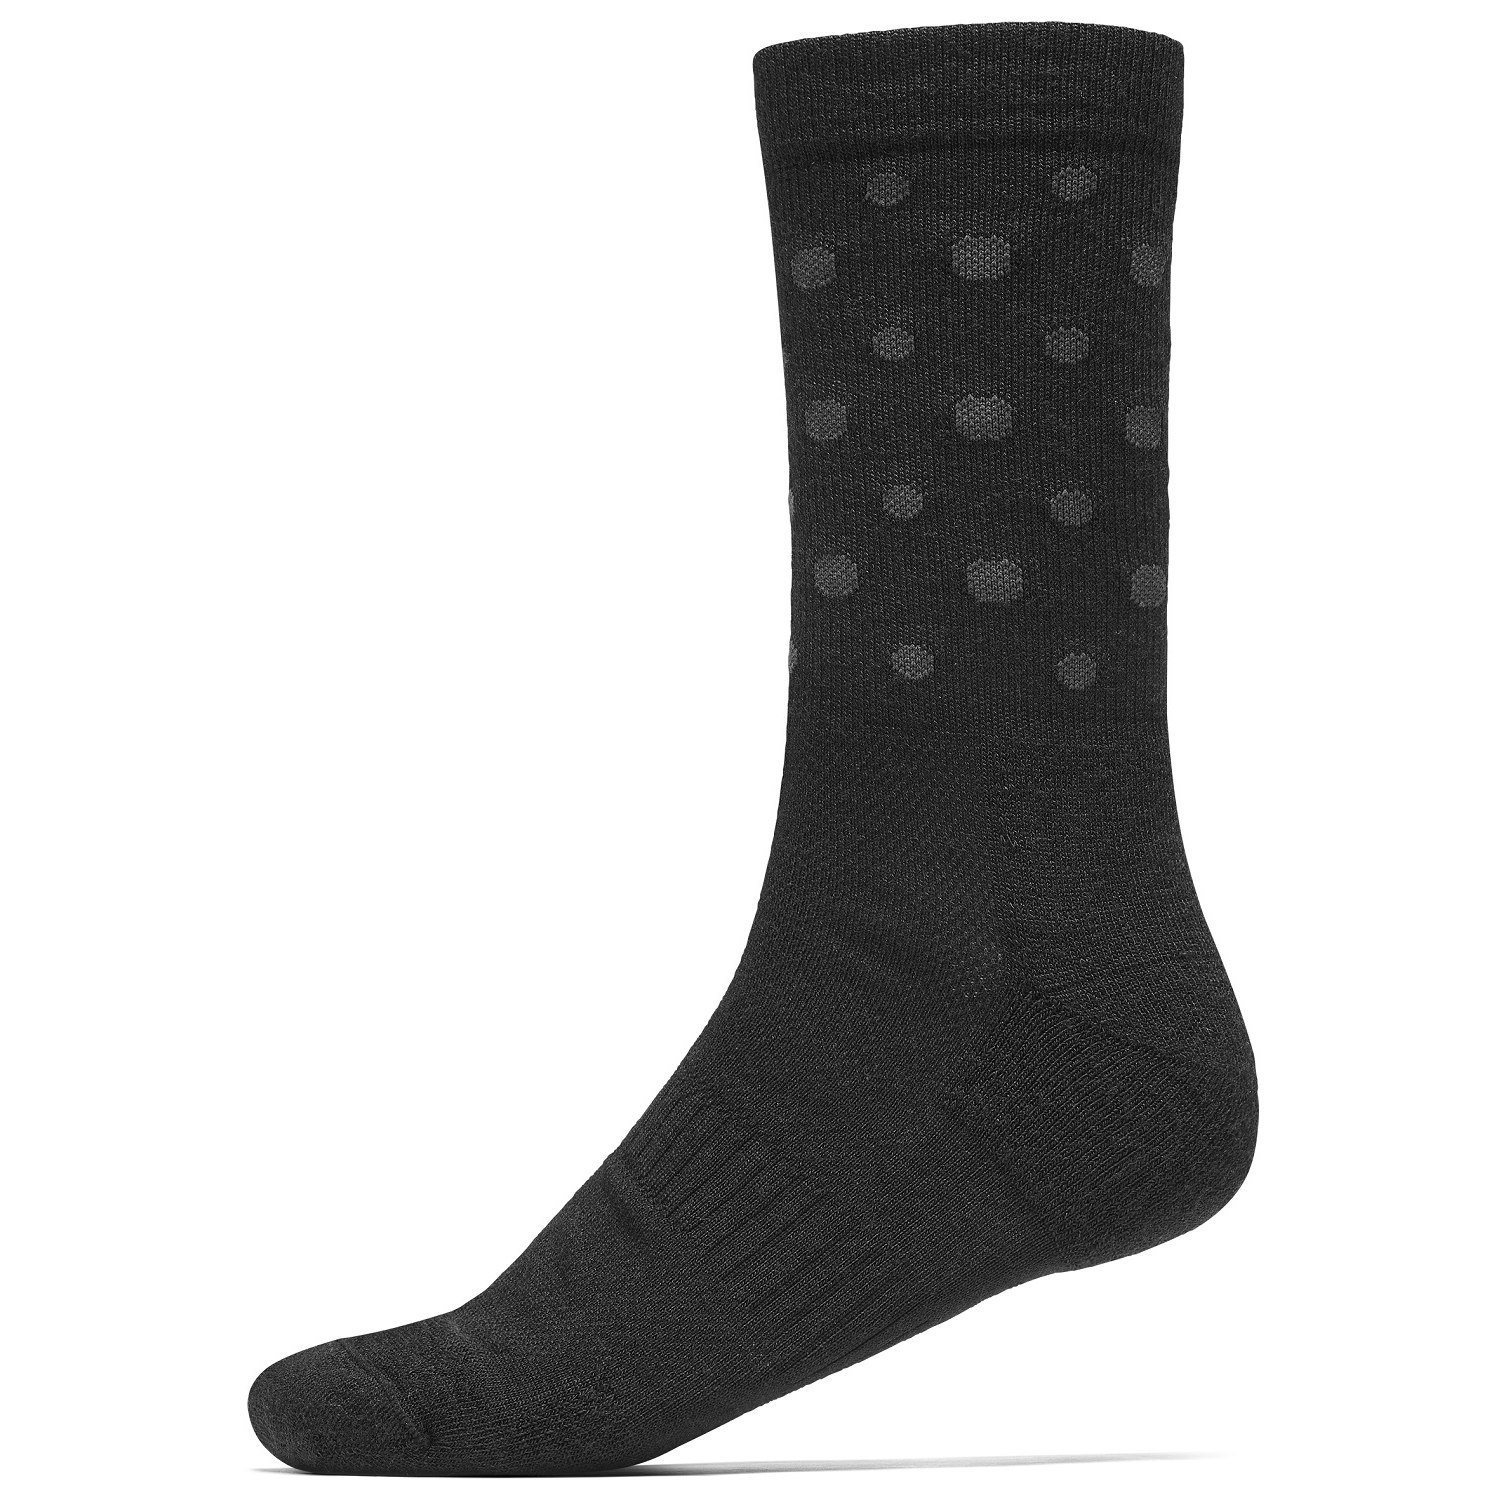 Produktbild von Icebug Active Merino Socken - spots black/grey